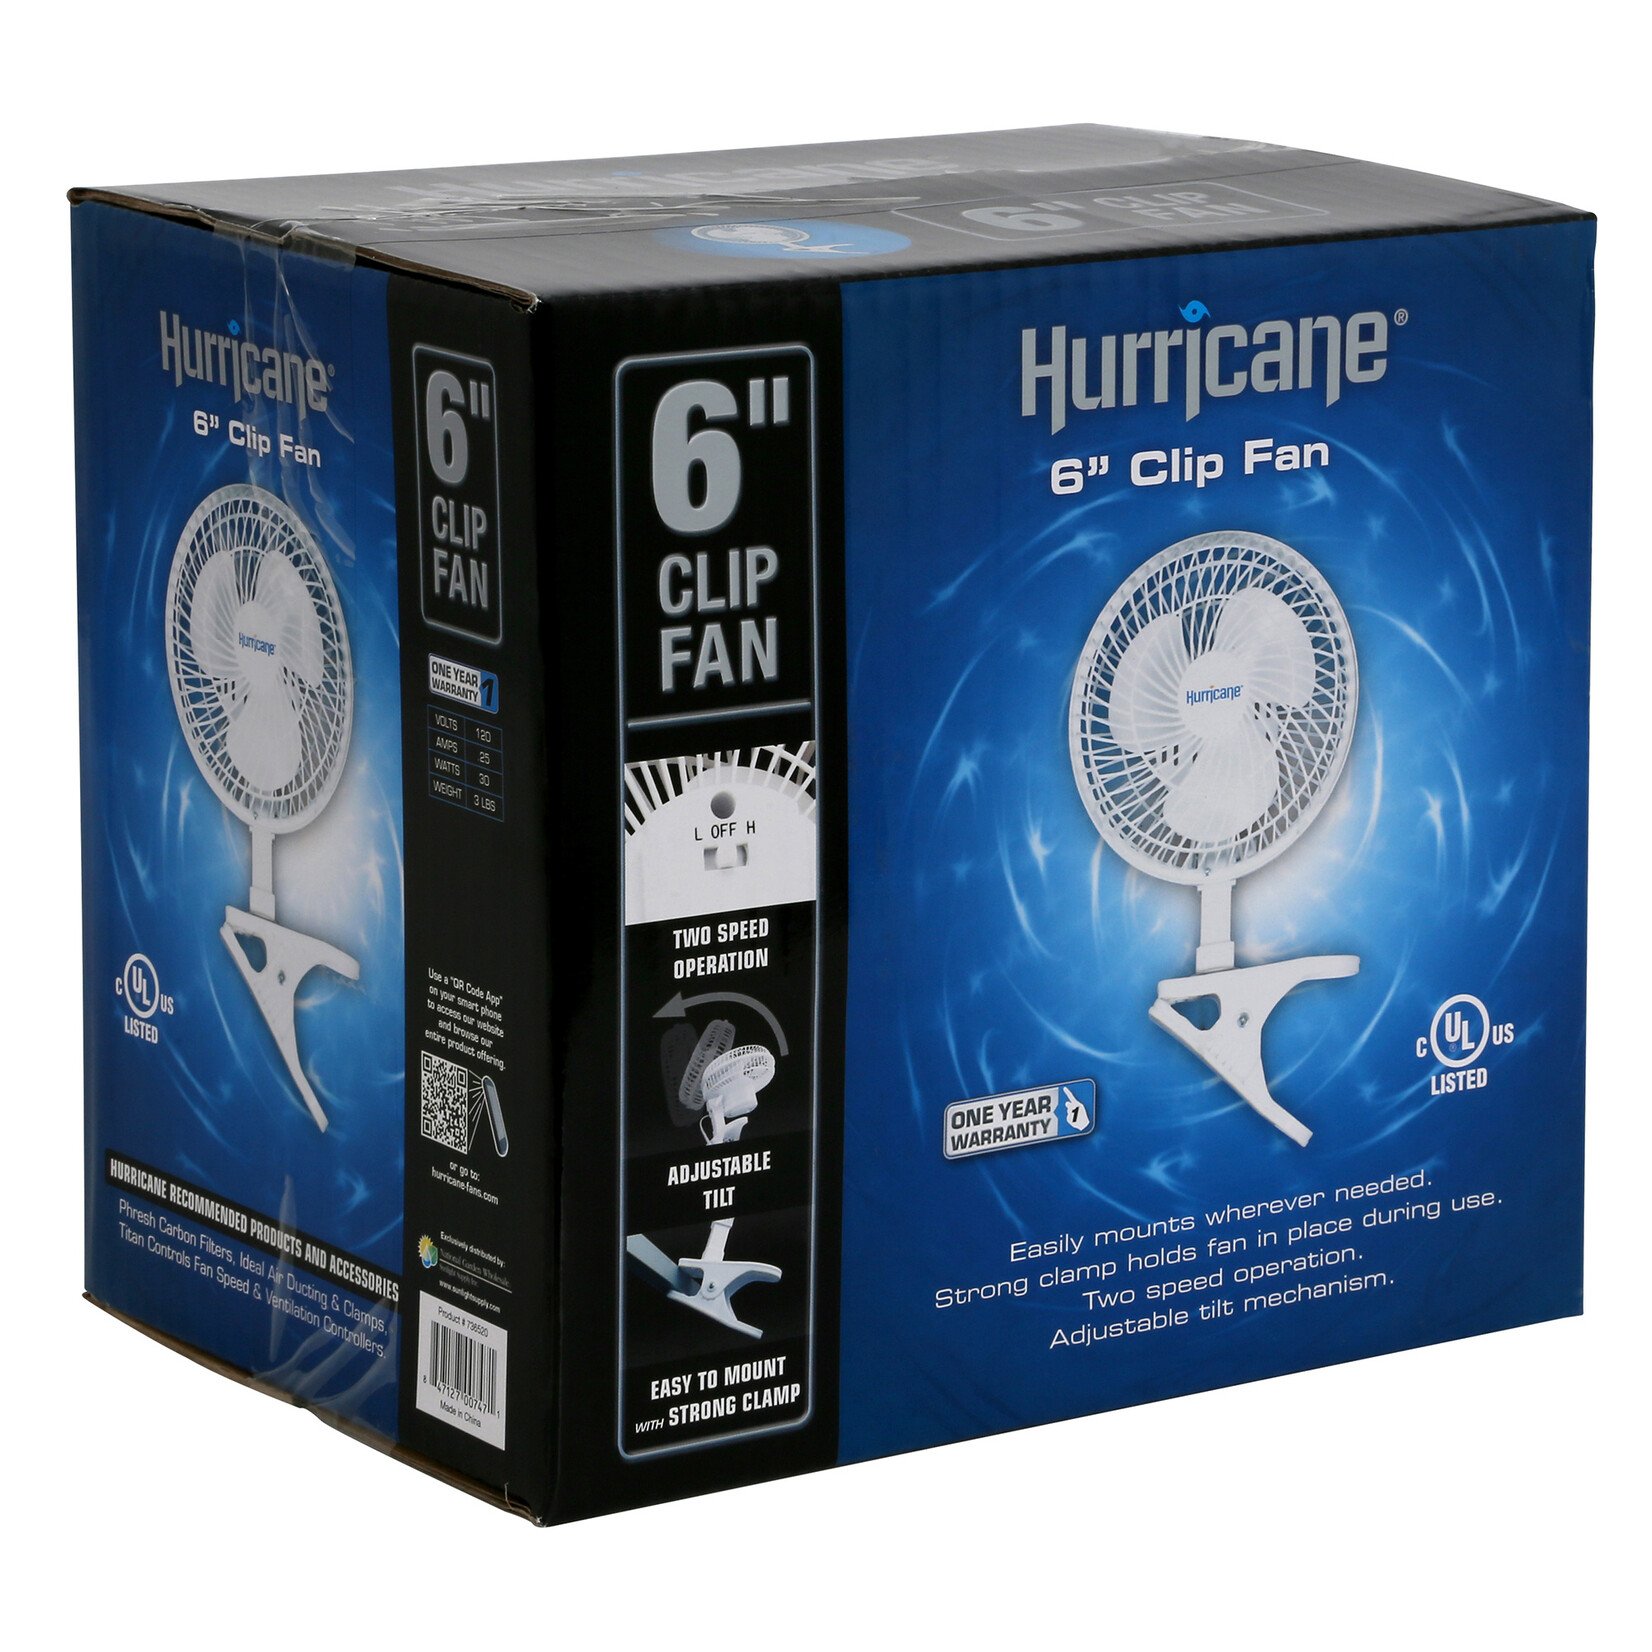 Hurricane Hurricane 6" Clip Fan